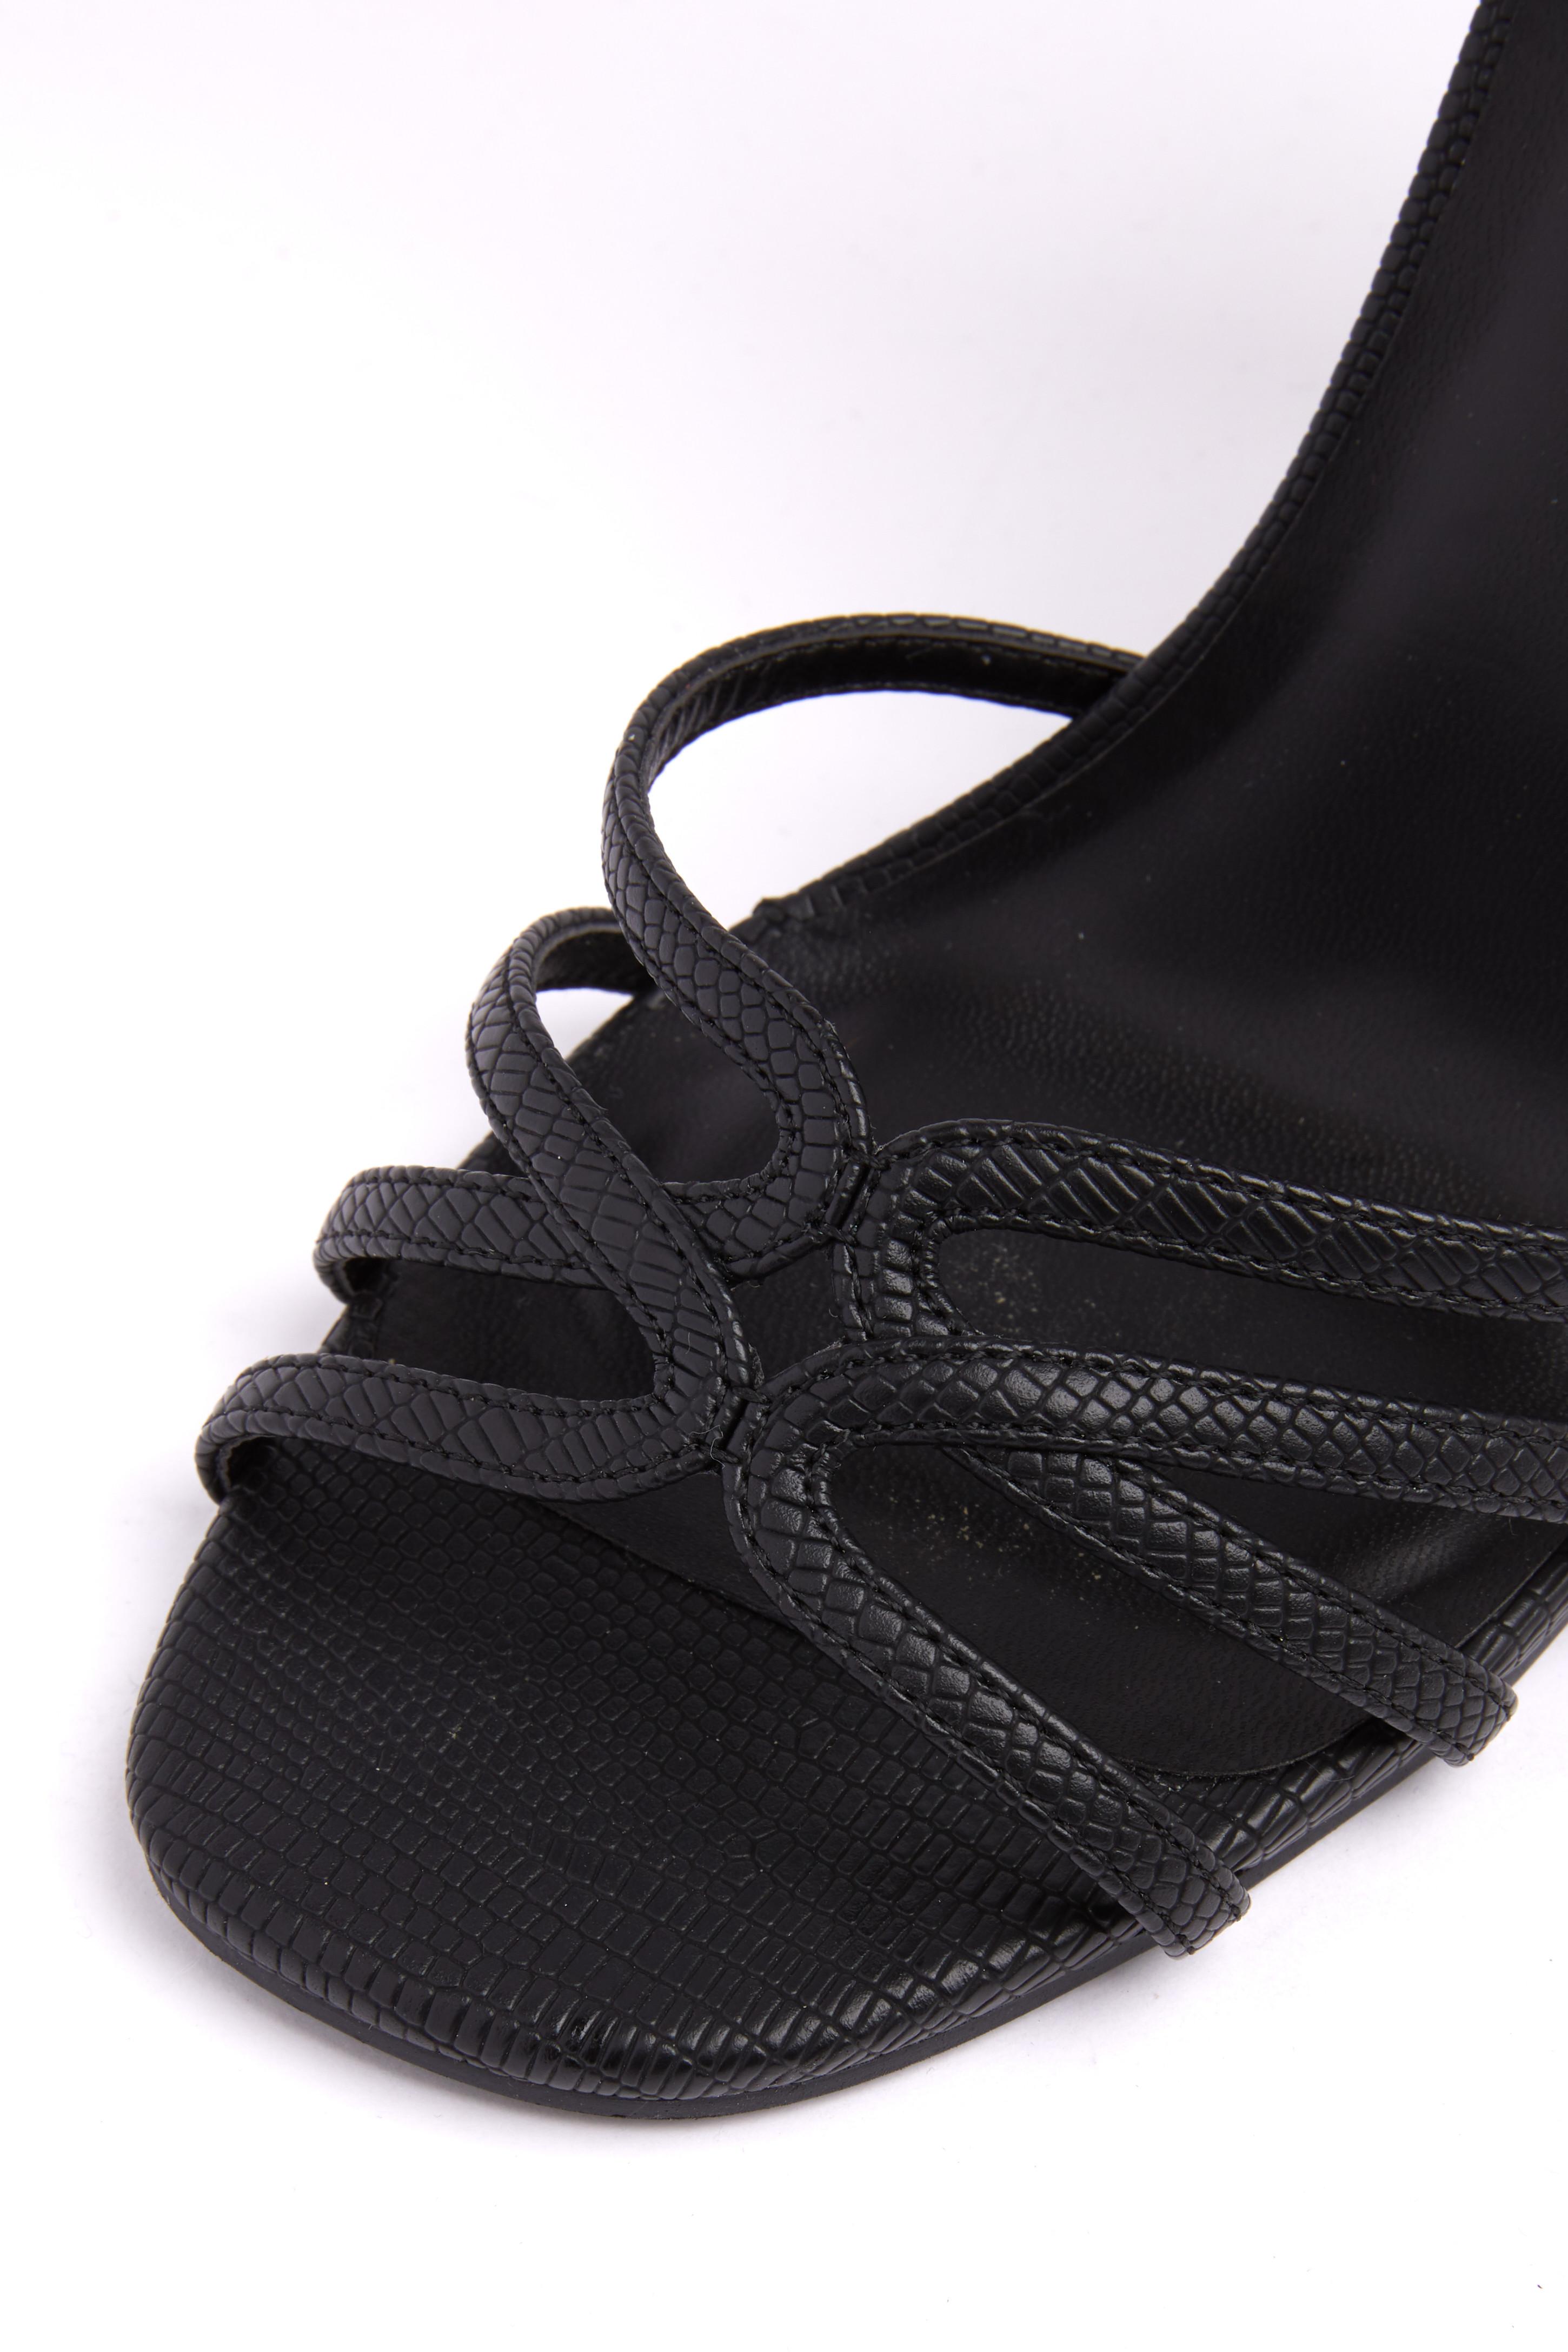 black strappy dress shoes